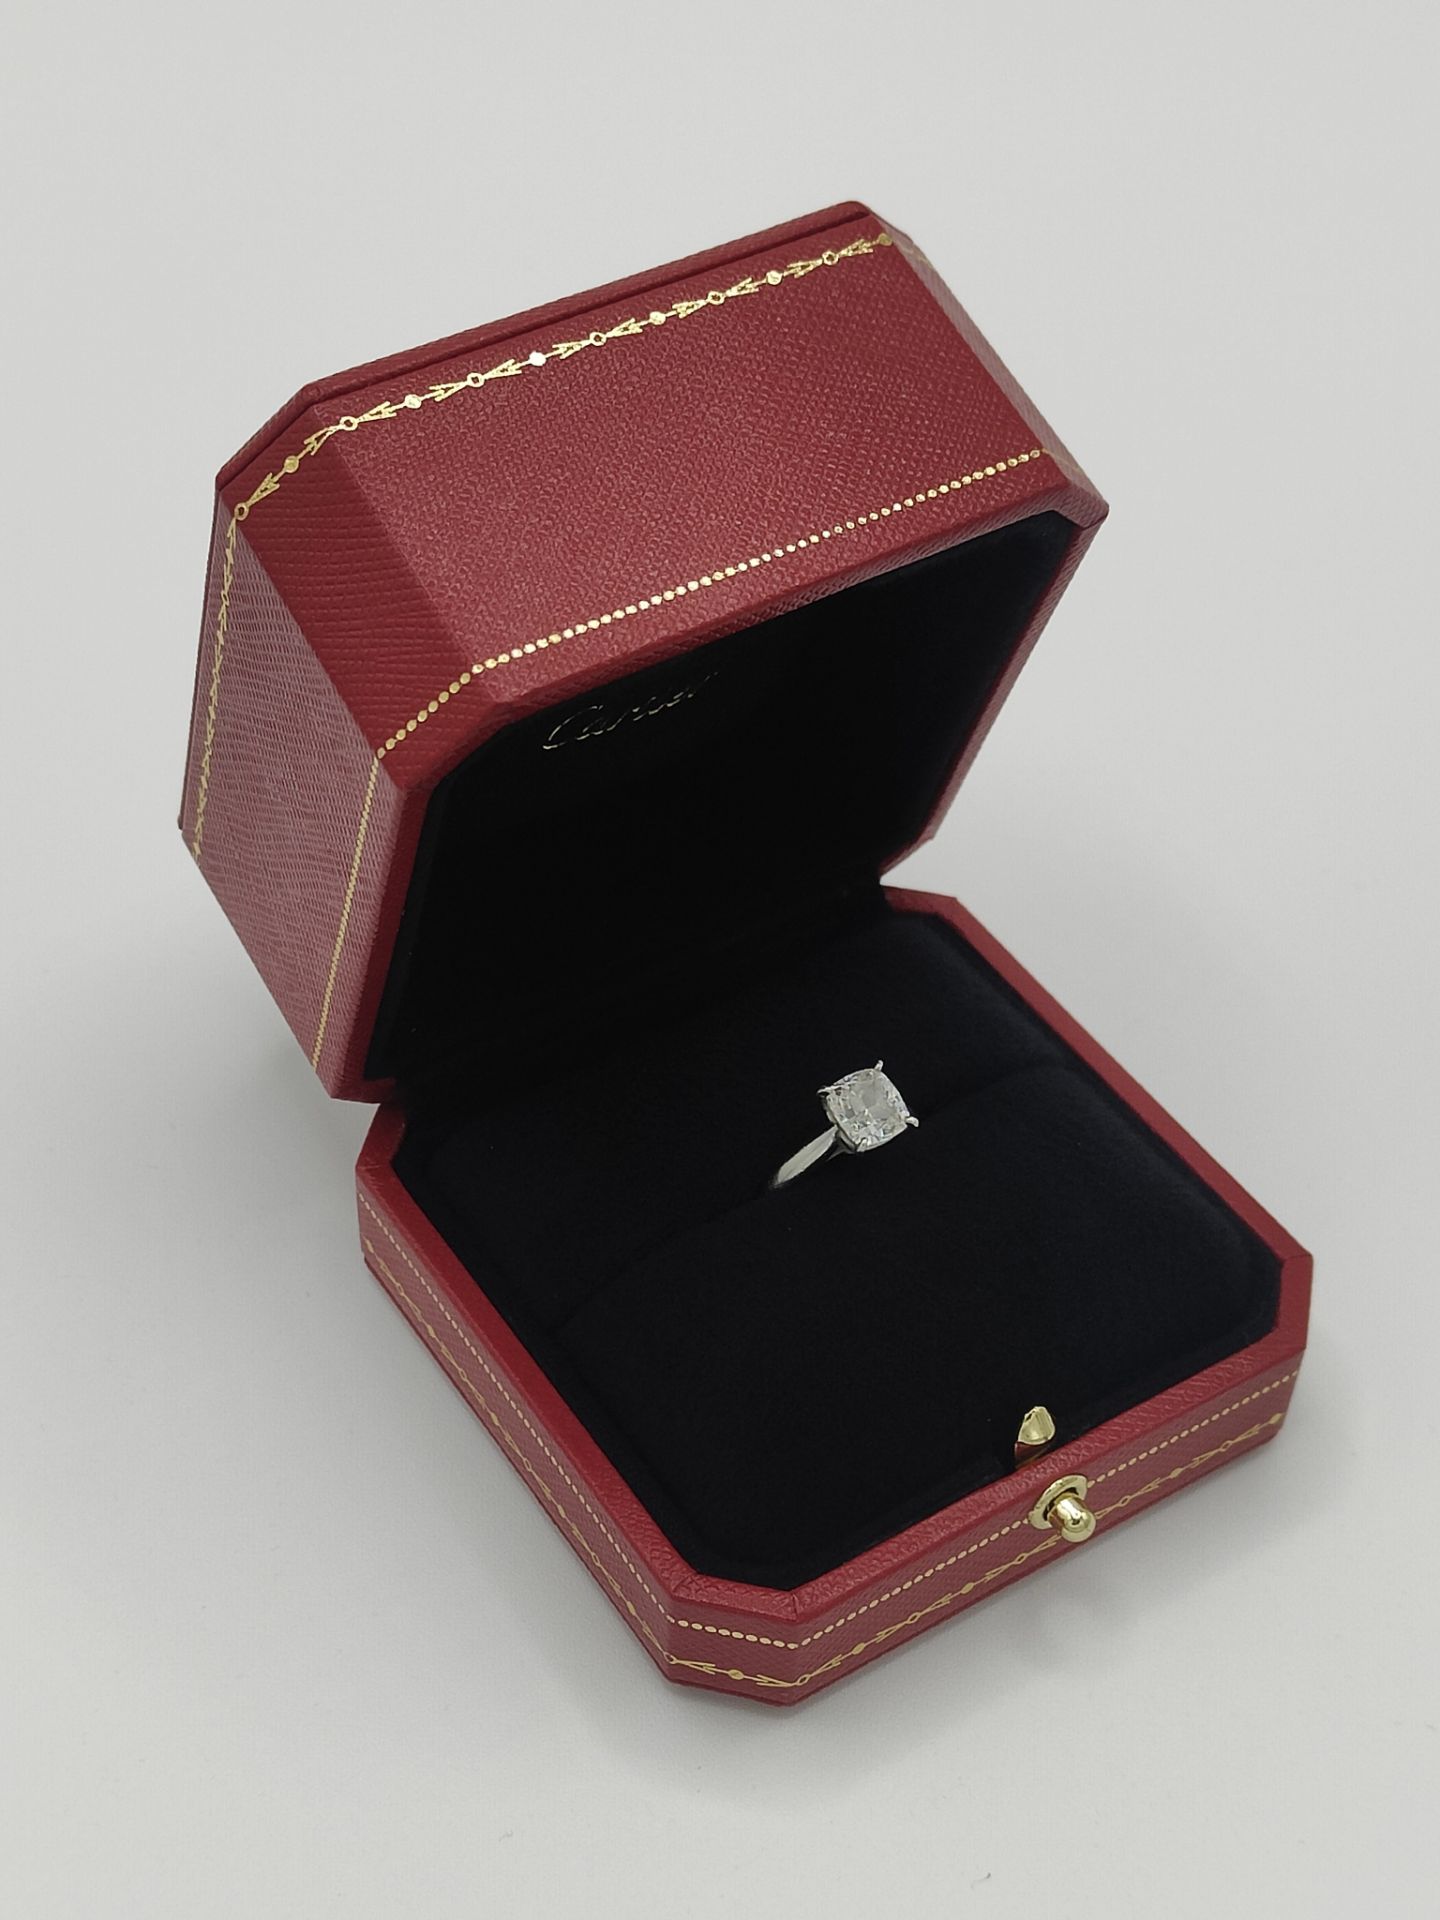 Cartier 2.08ct Cushion Cut Diamond Ring - Image 2 of 5